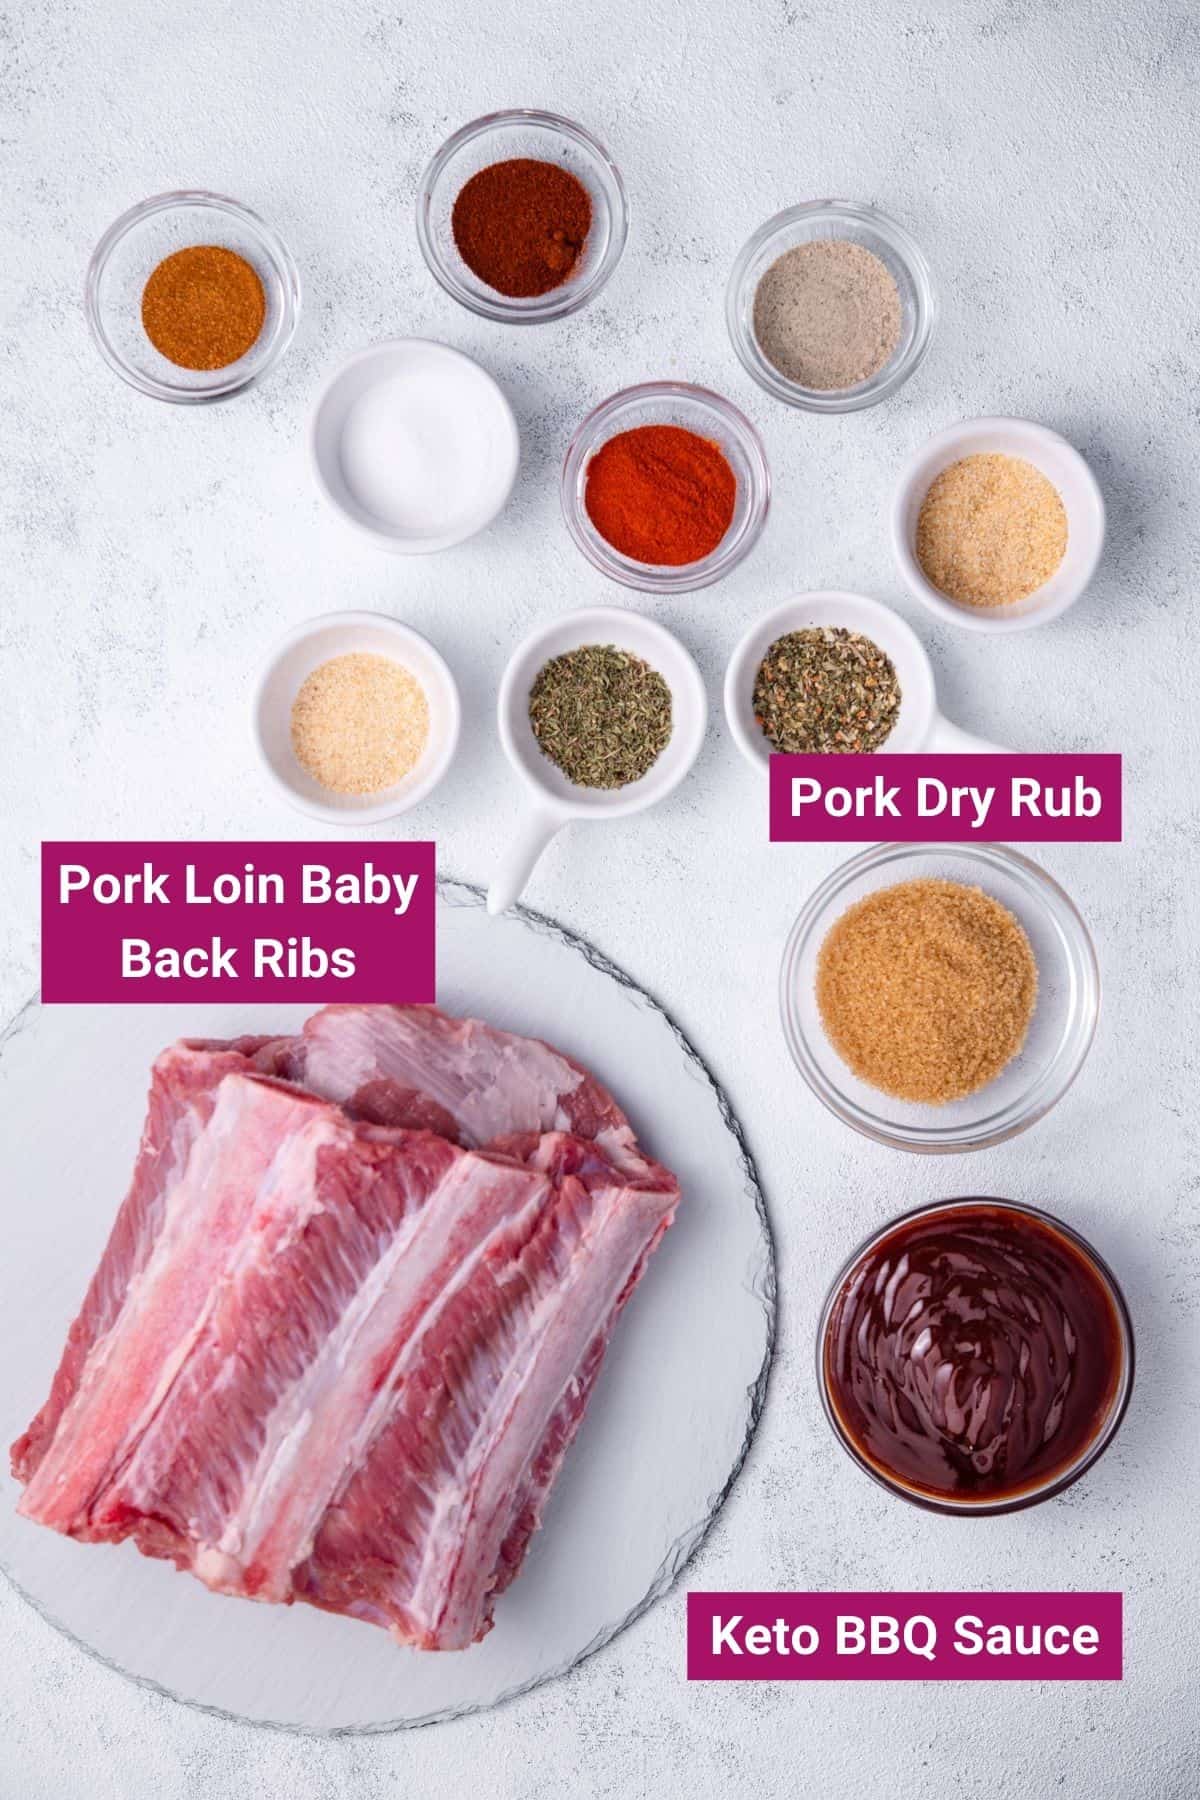 pork dry rub, bbq sauce, pork loin baby back ribs in separate bowls